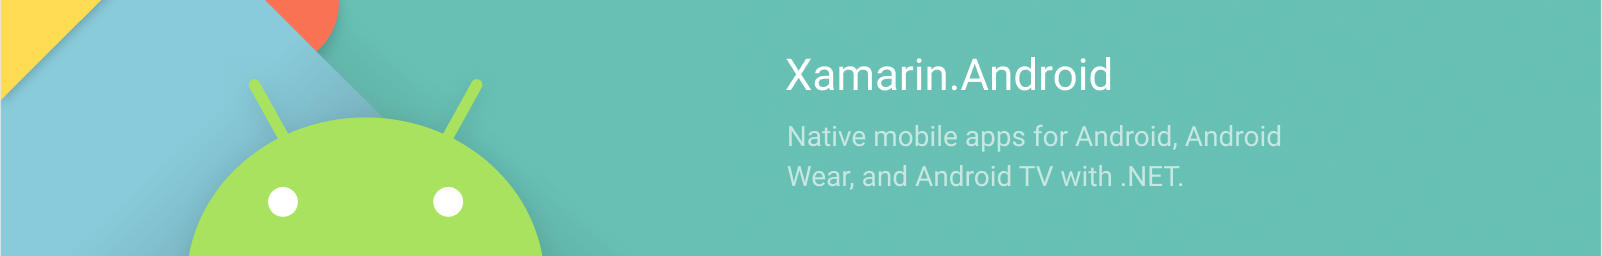 Xamarin.Android banner